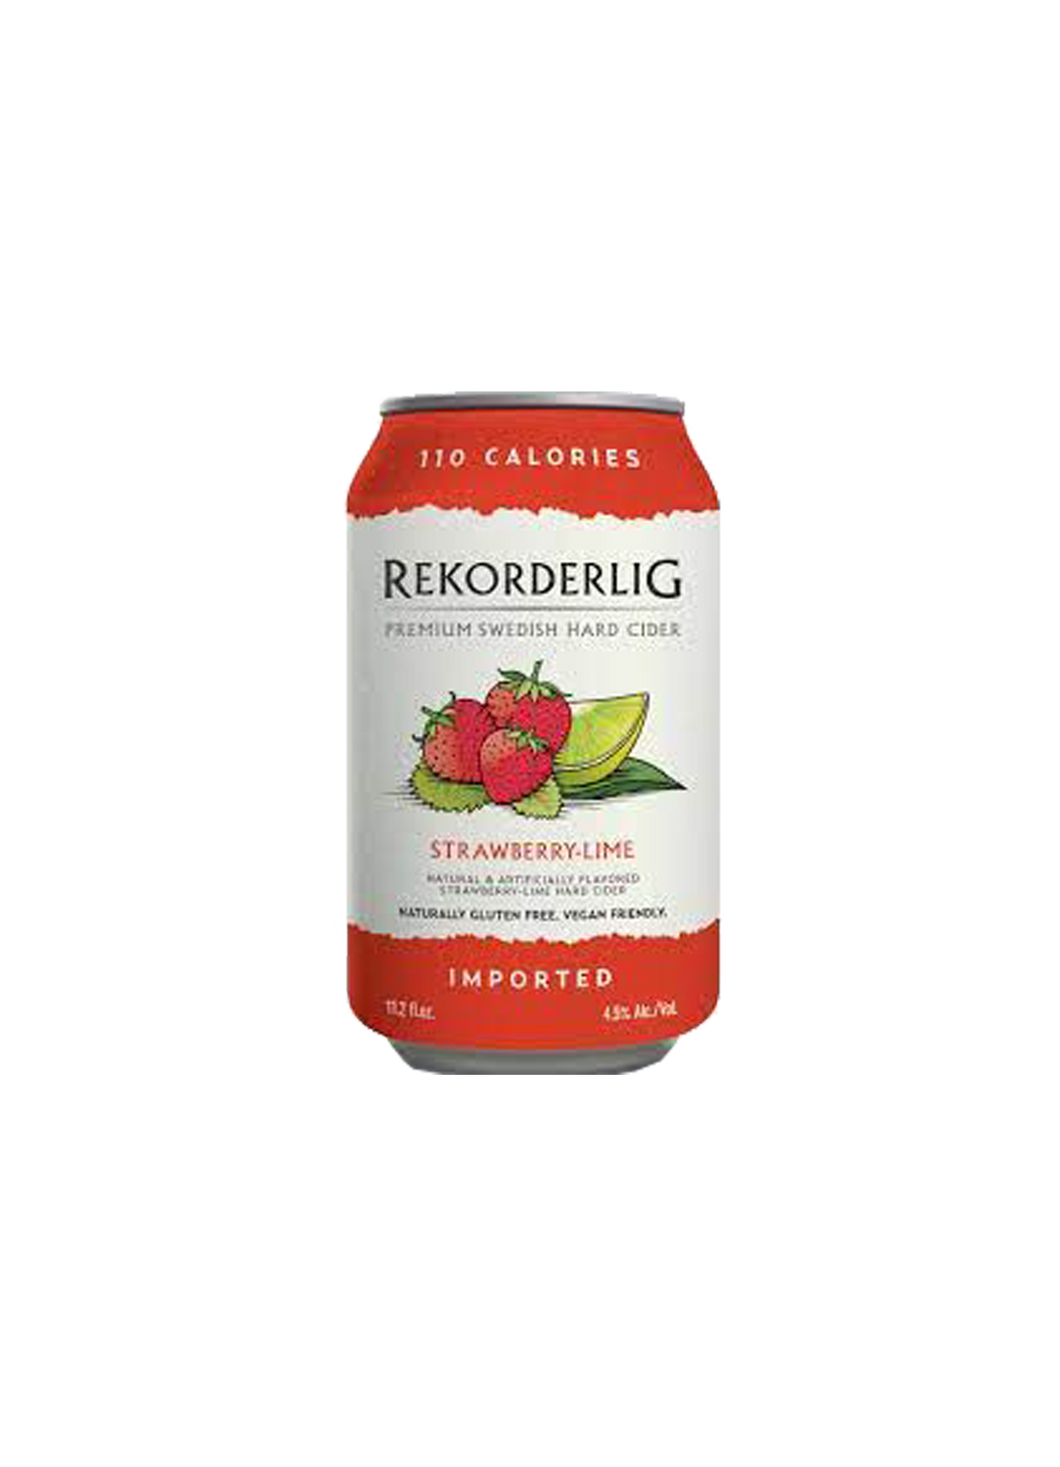 Rekorderlig Strawberry-Lime Swedish Hard Cider